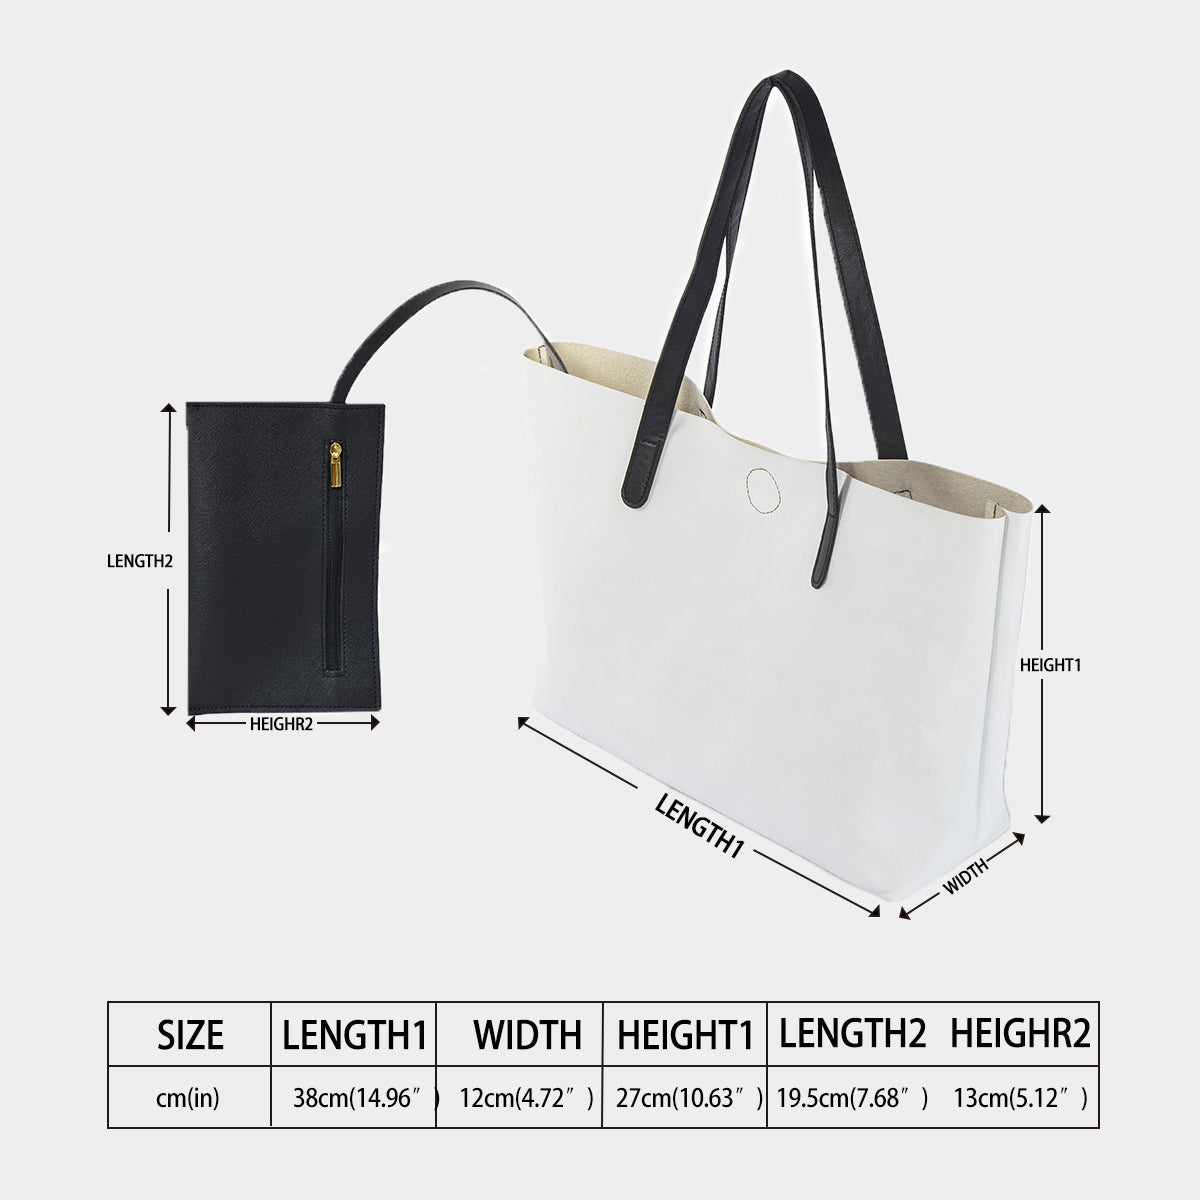 Nature's Nexus Black Shopping Tote Bag With Black Mini Purse